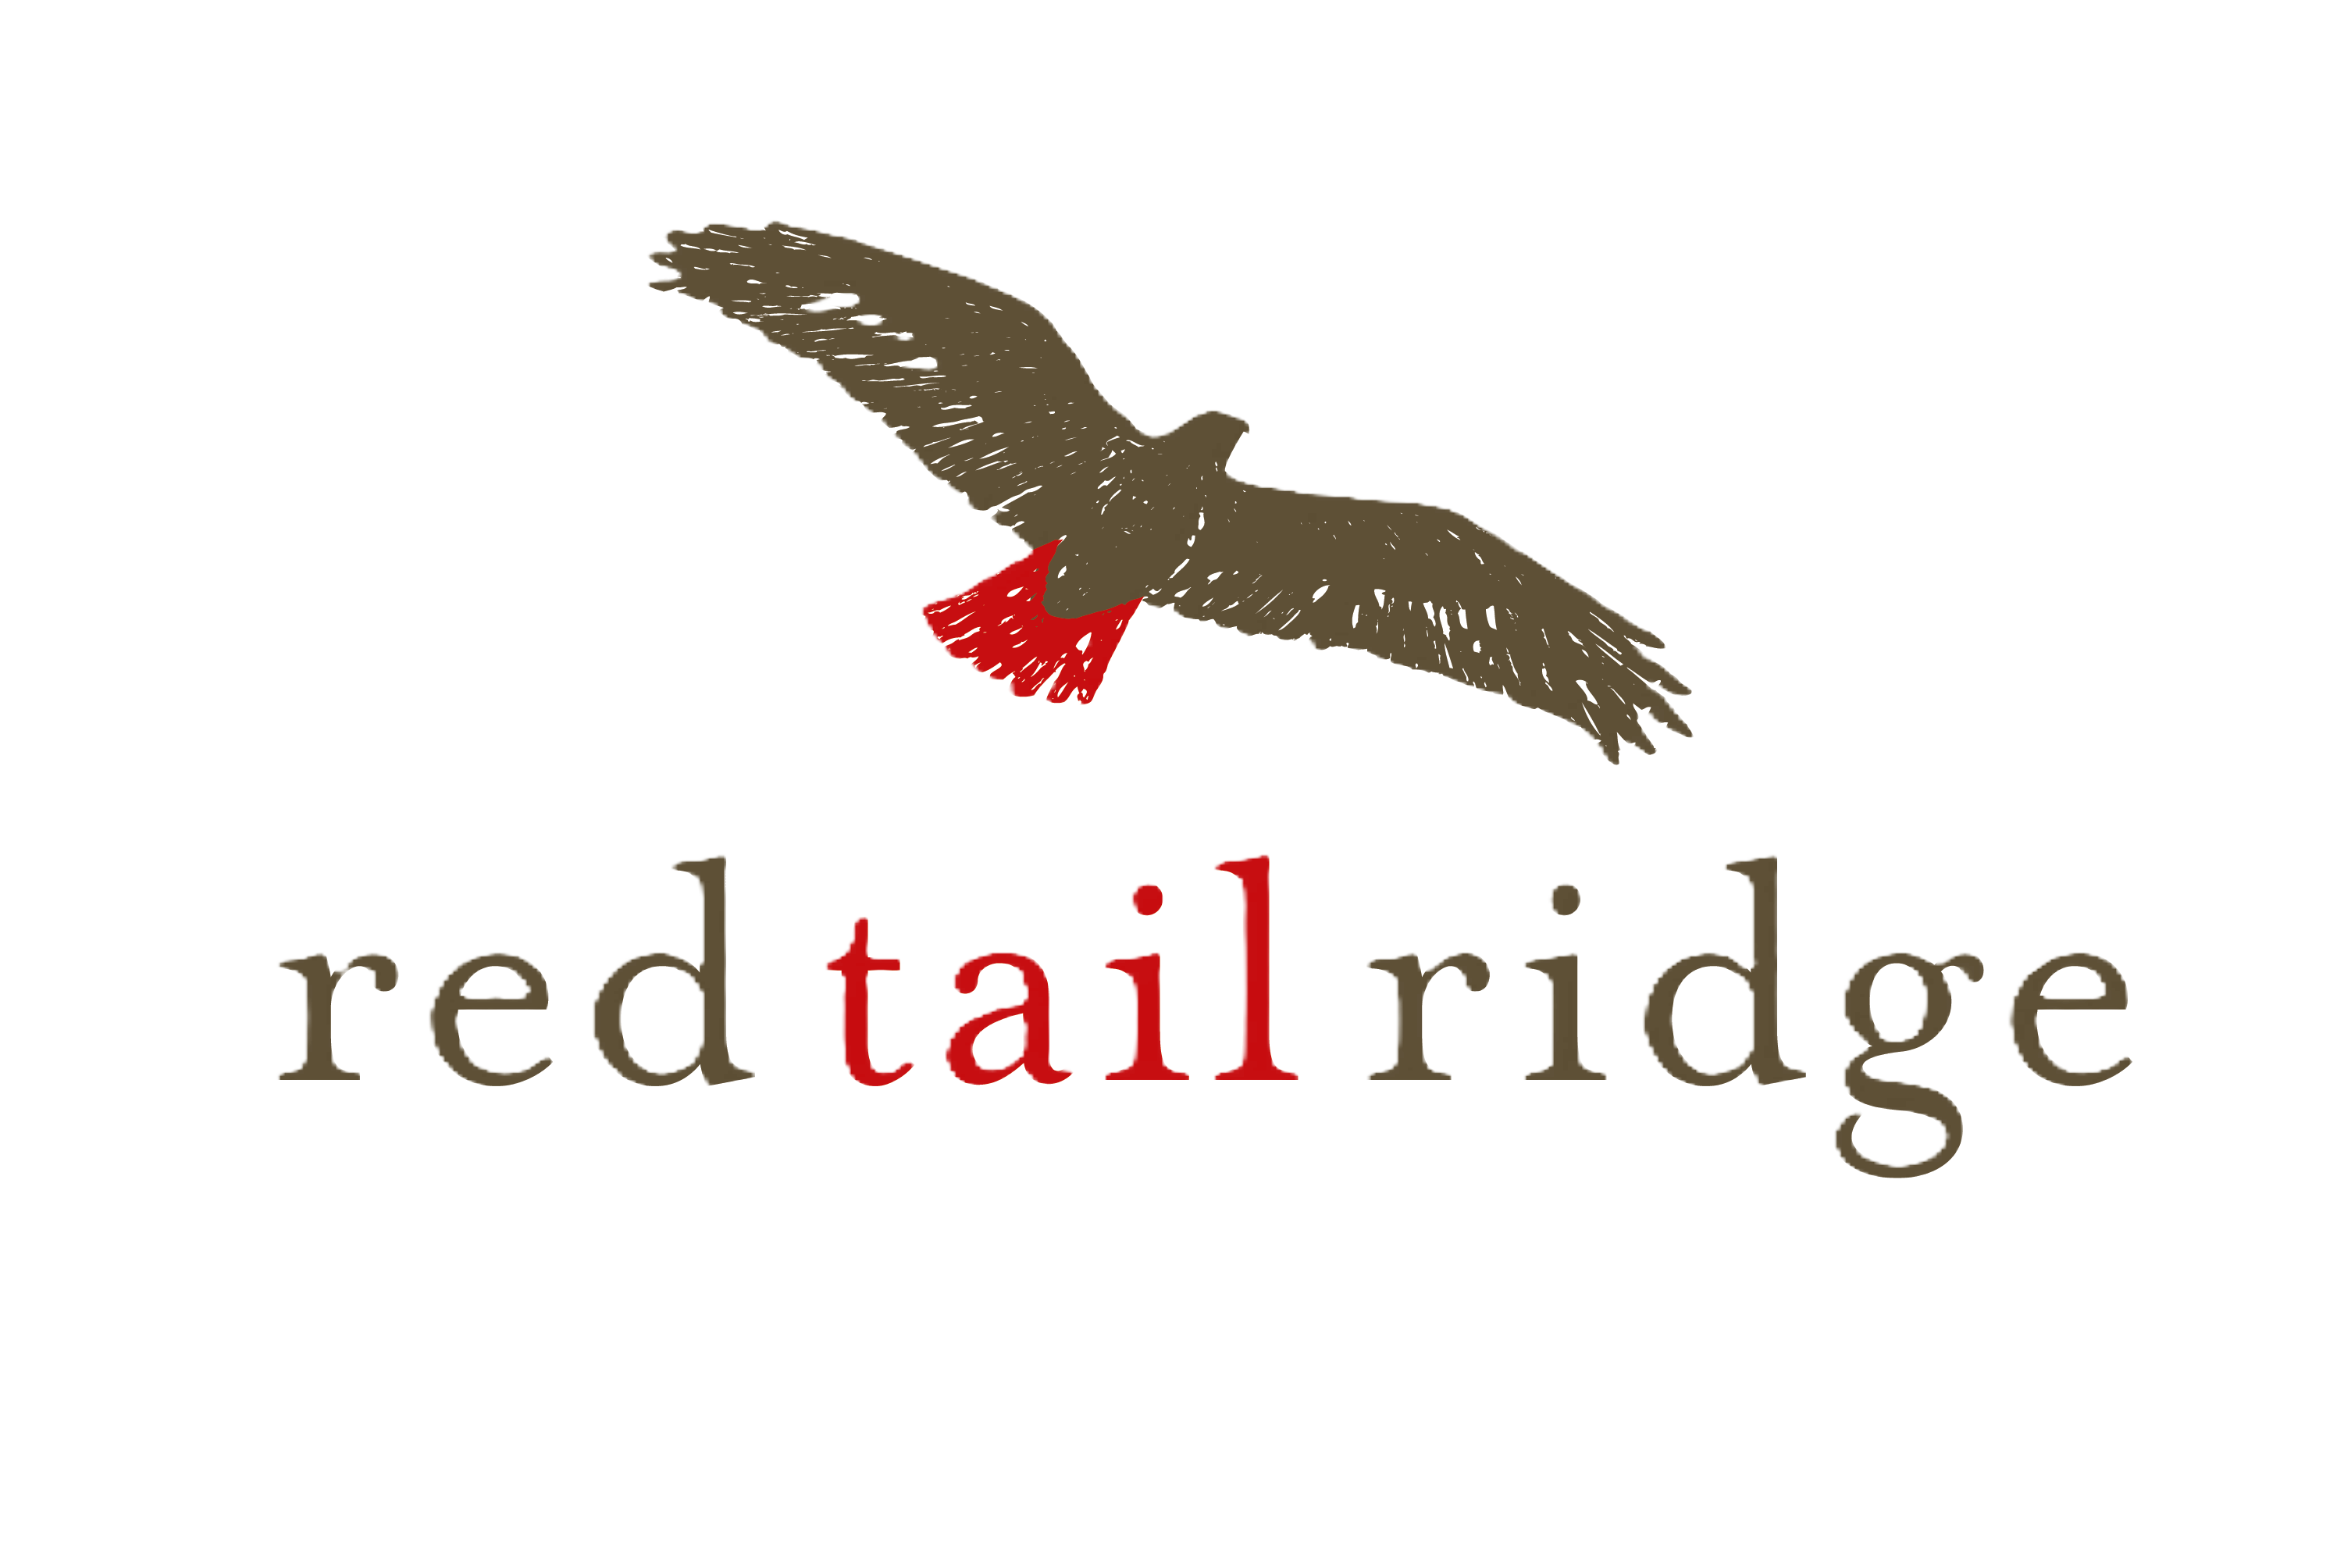 Red Tail Ridge Winery